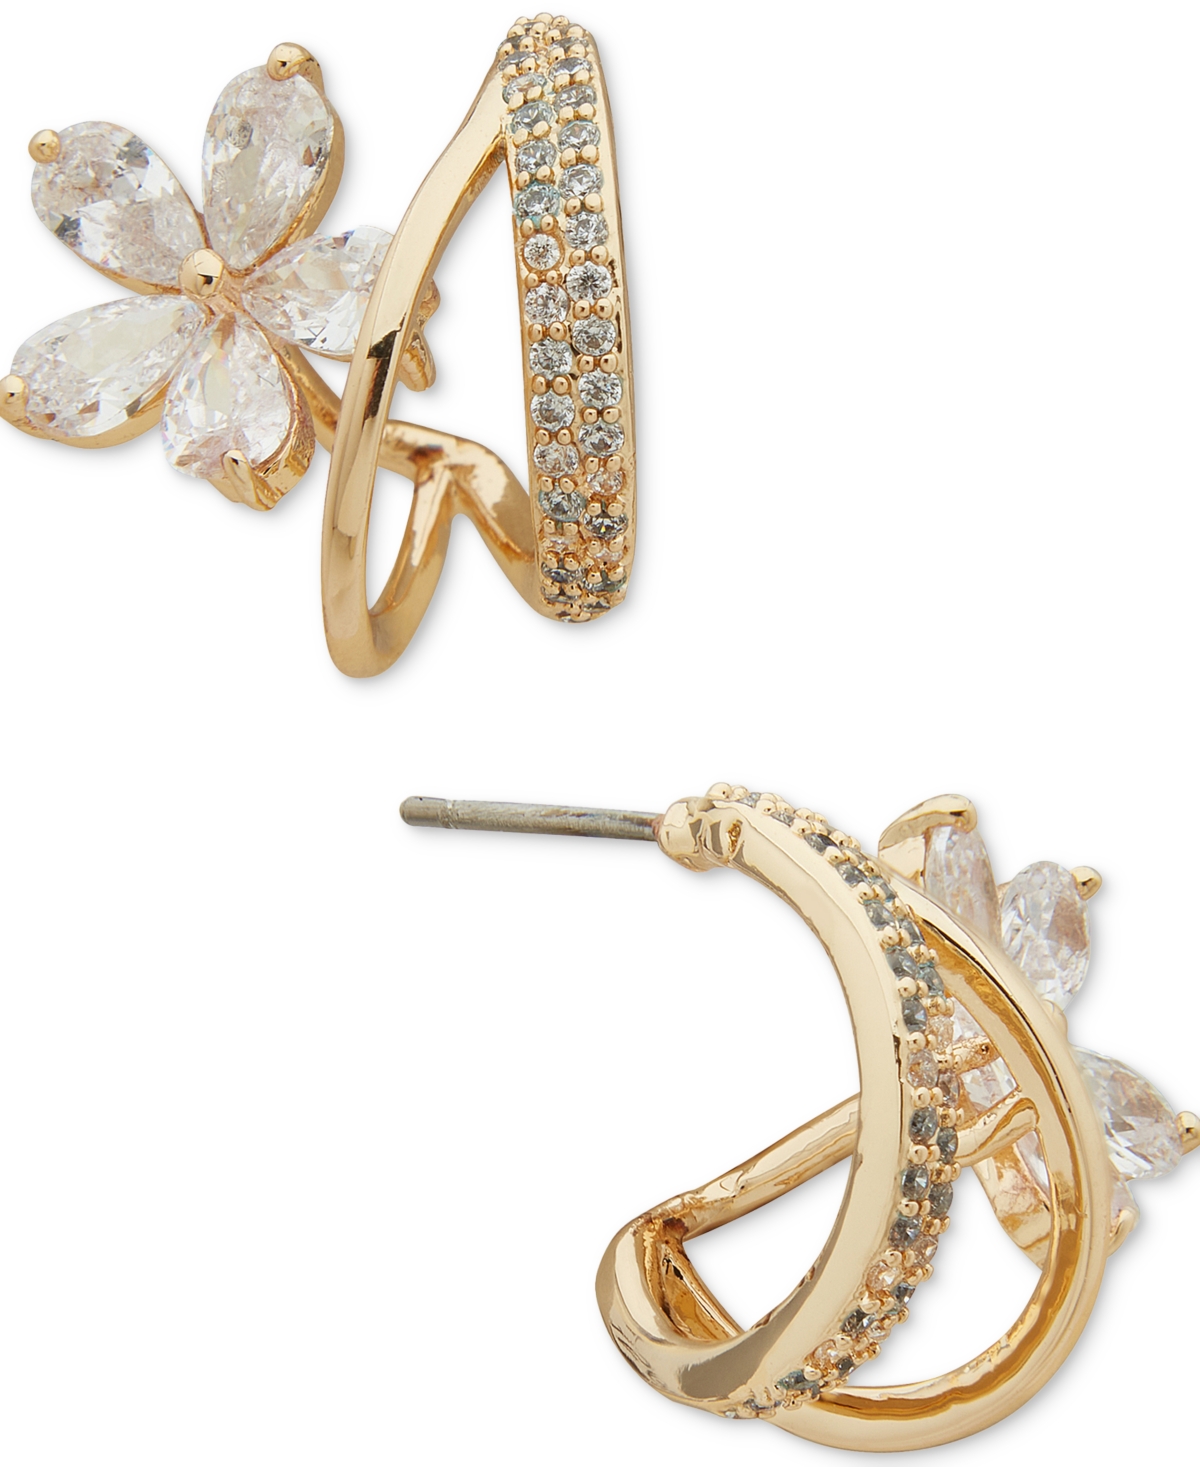 Gold-Tone Crystal Flower Small Hoop Earrings, .58" - White